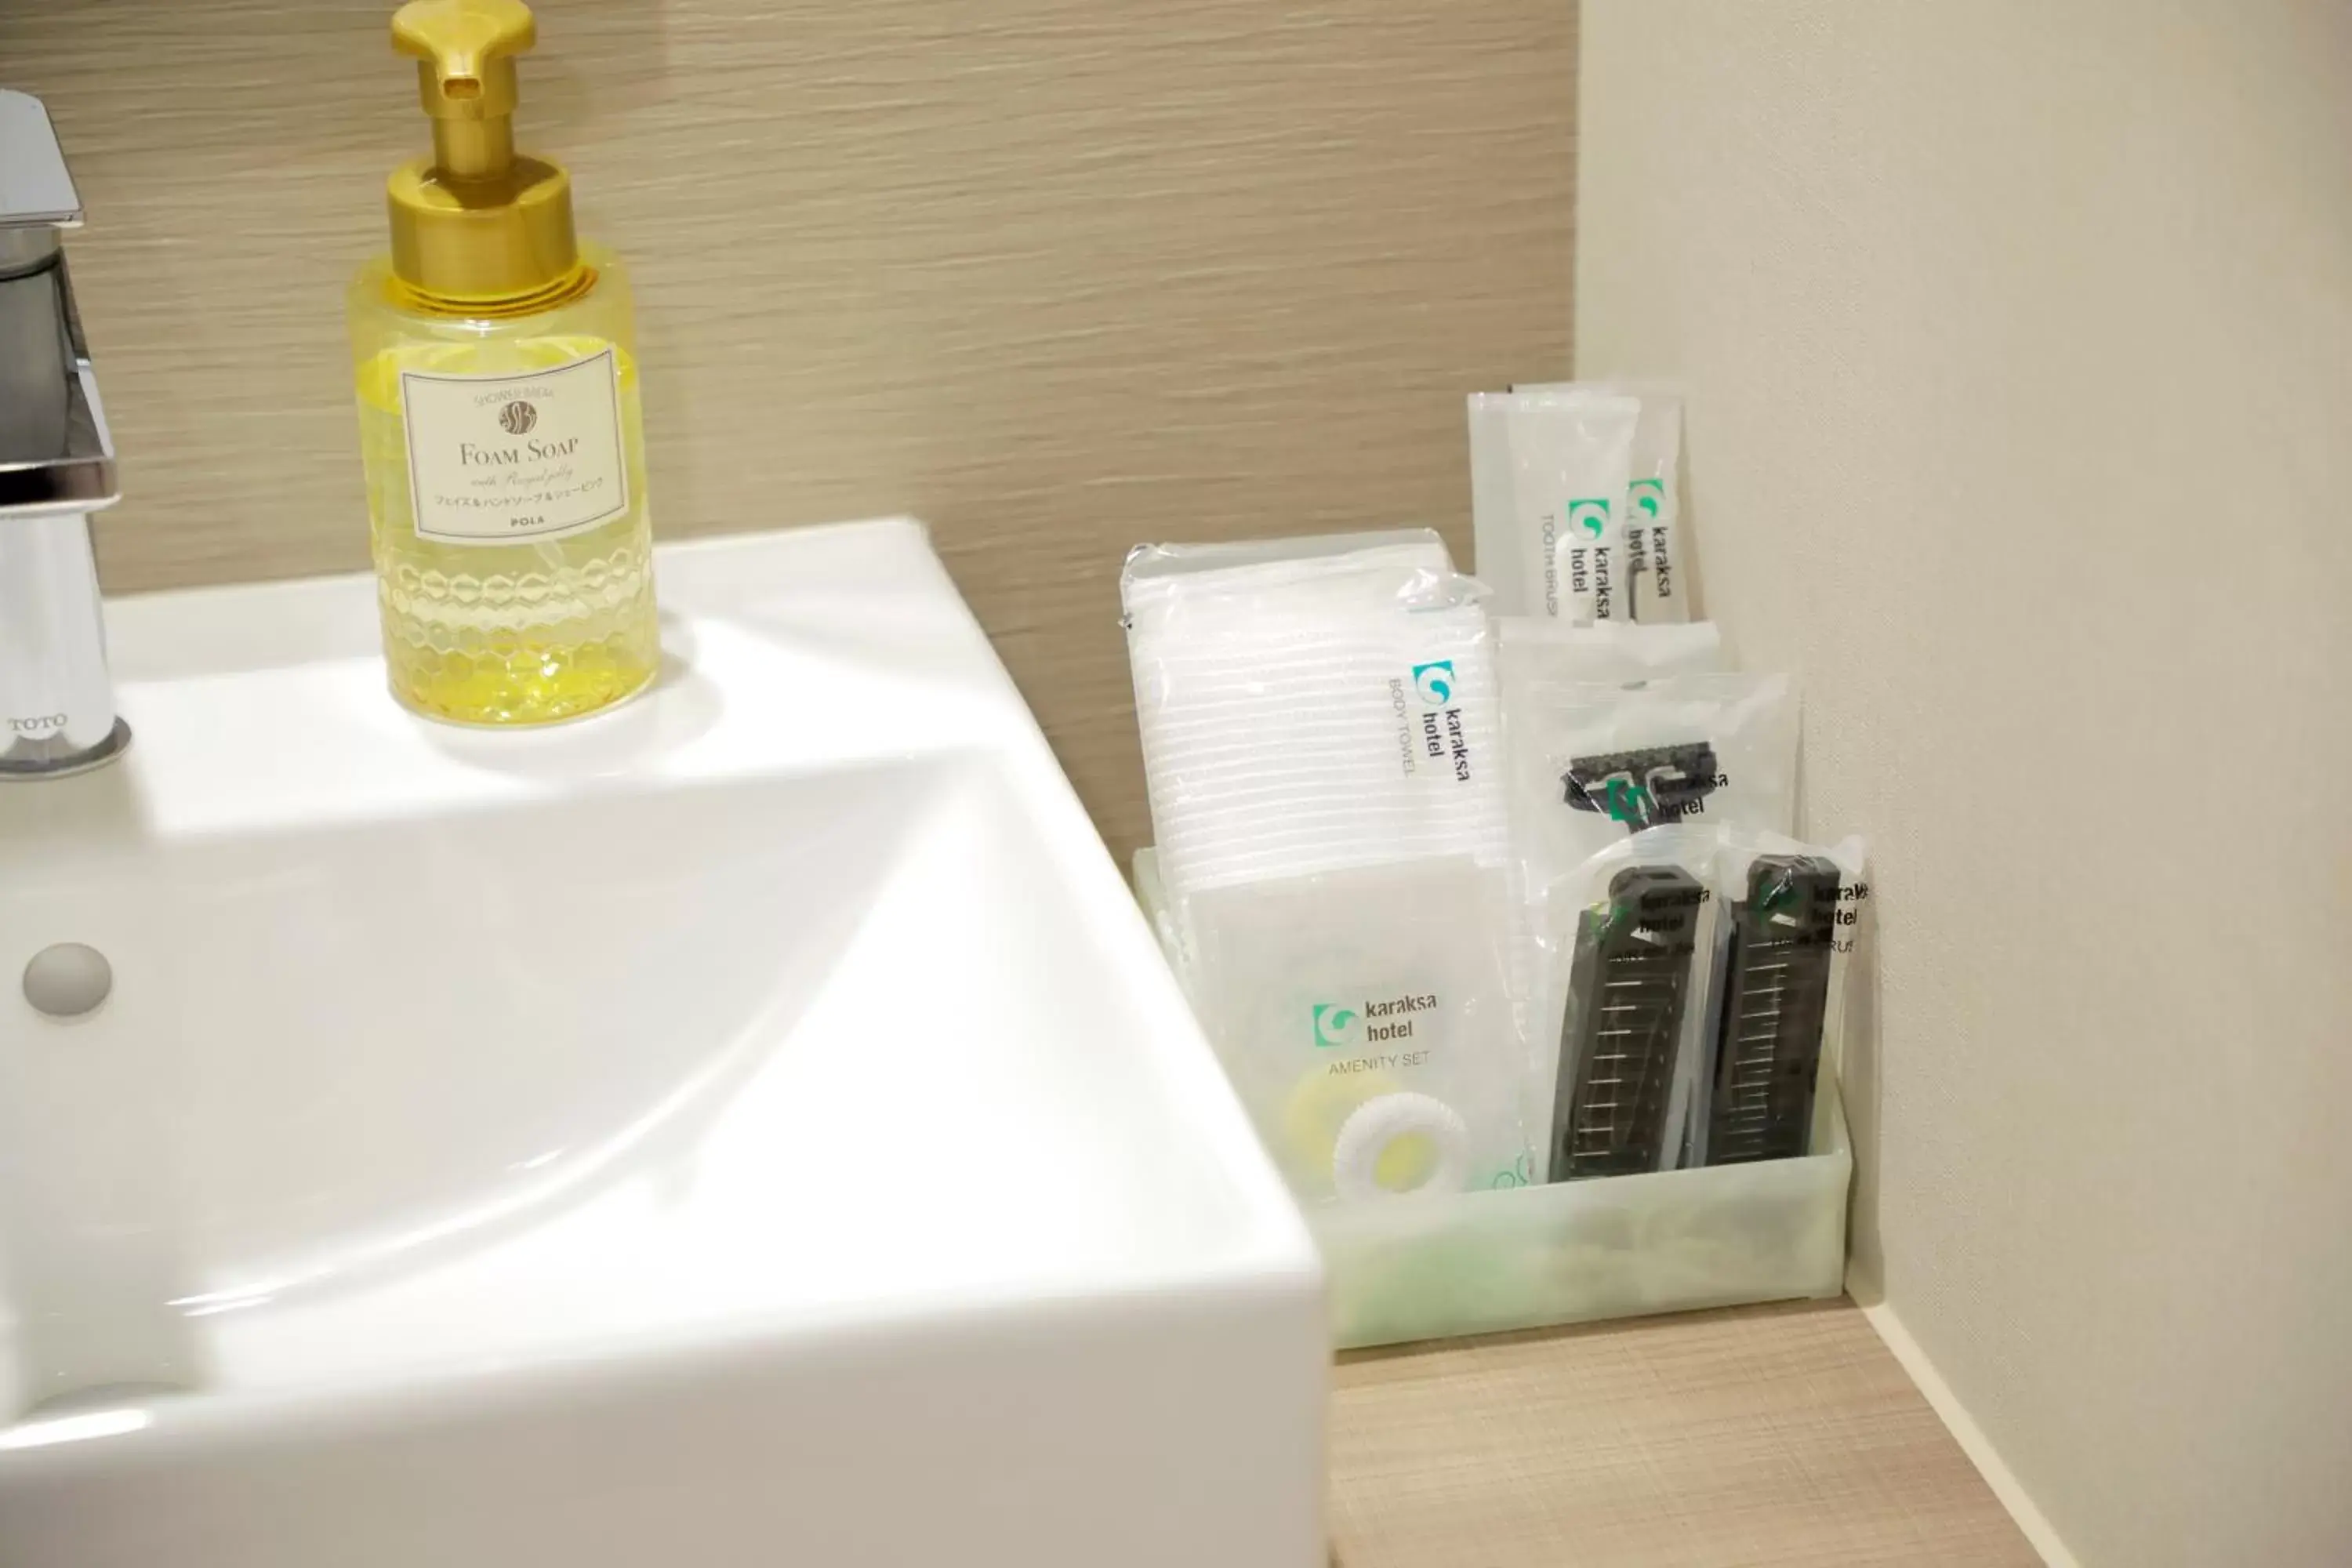 Decorative detail, Bathroom in karaksa hotel Sapporo